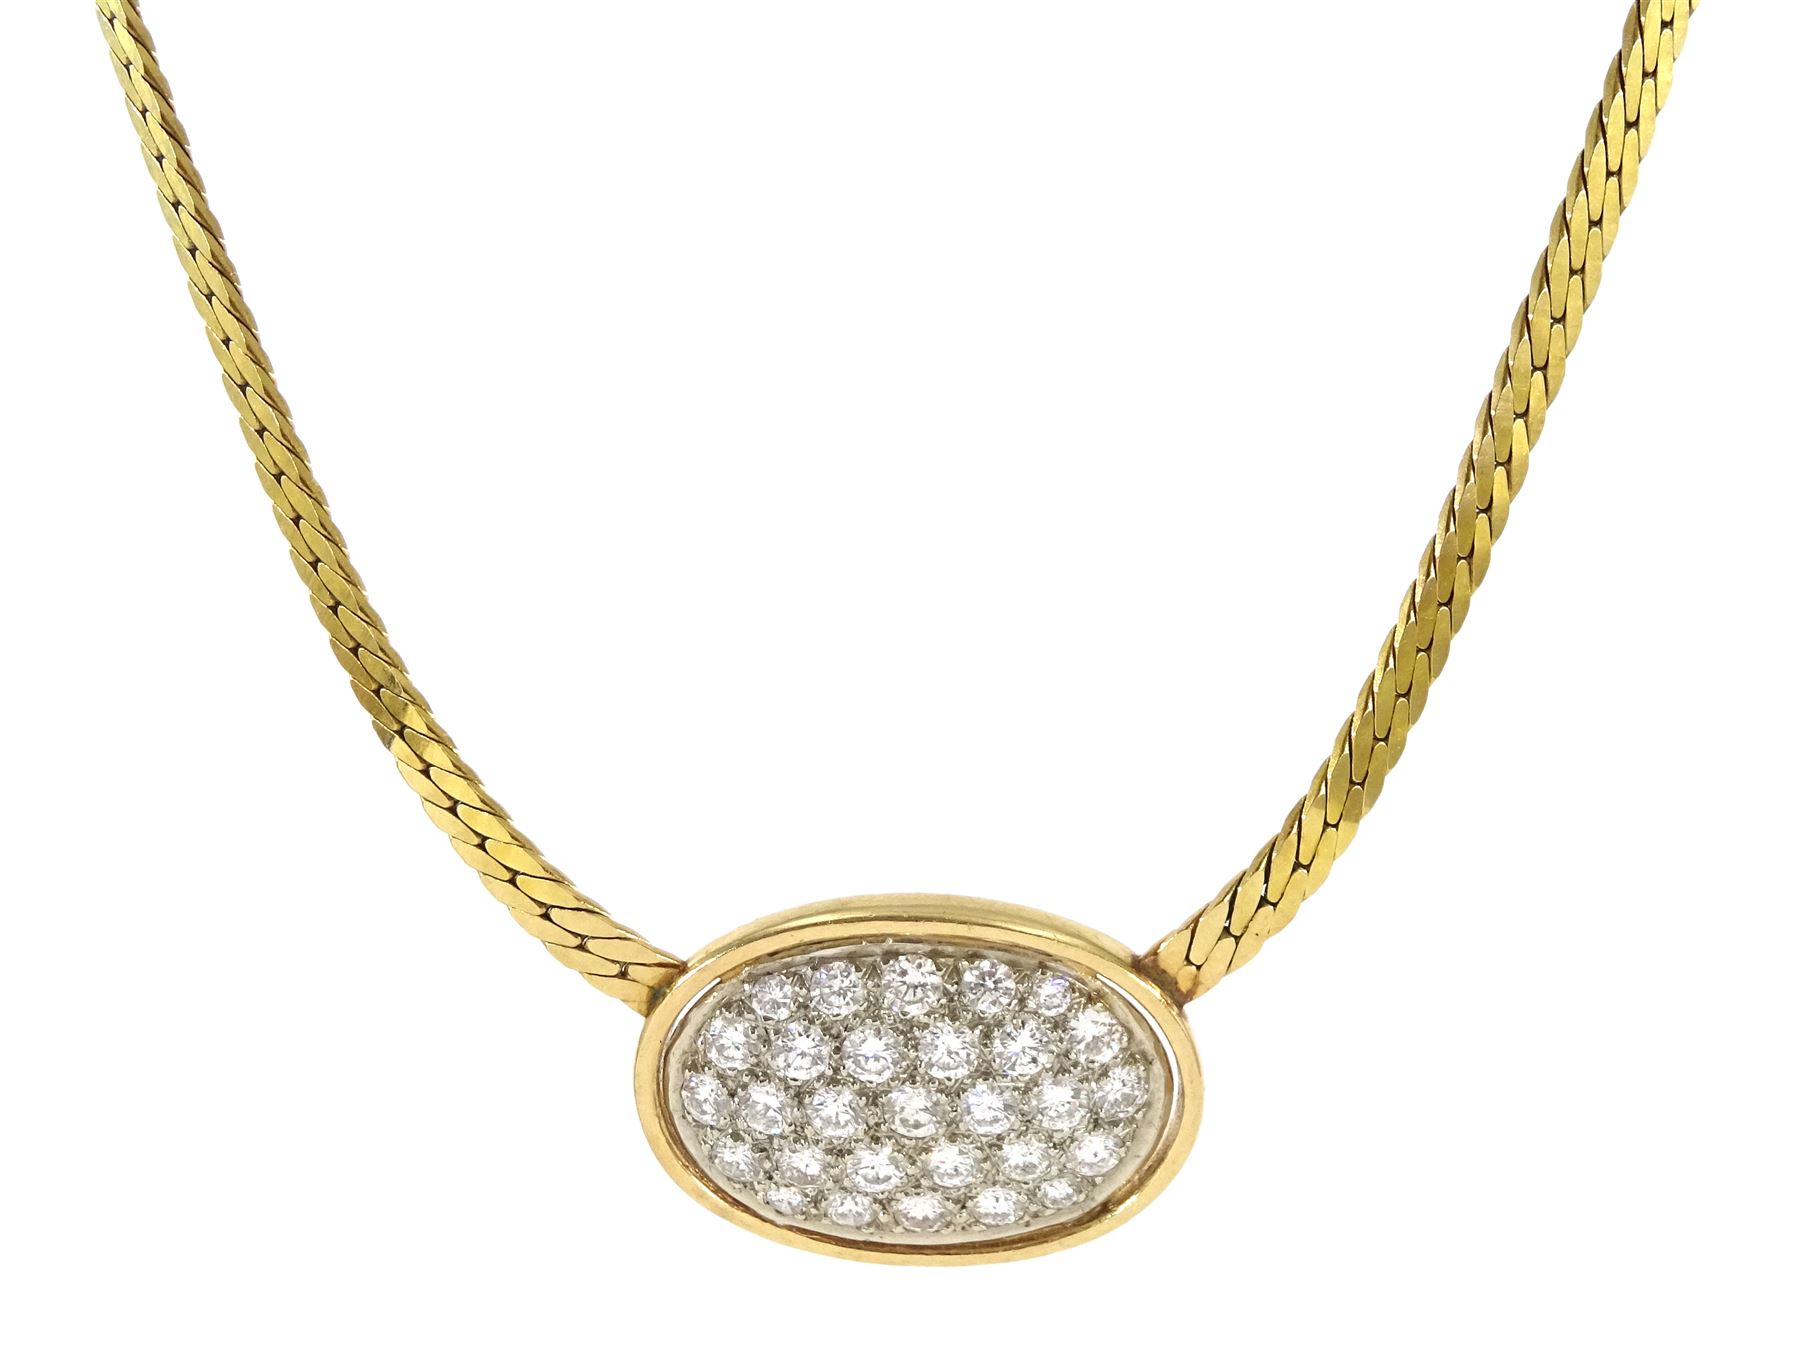 14ct gold pave set round brilliant cut diamond necklace - Image 2 of 3